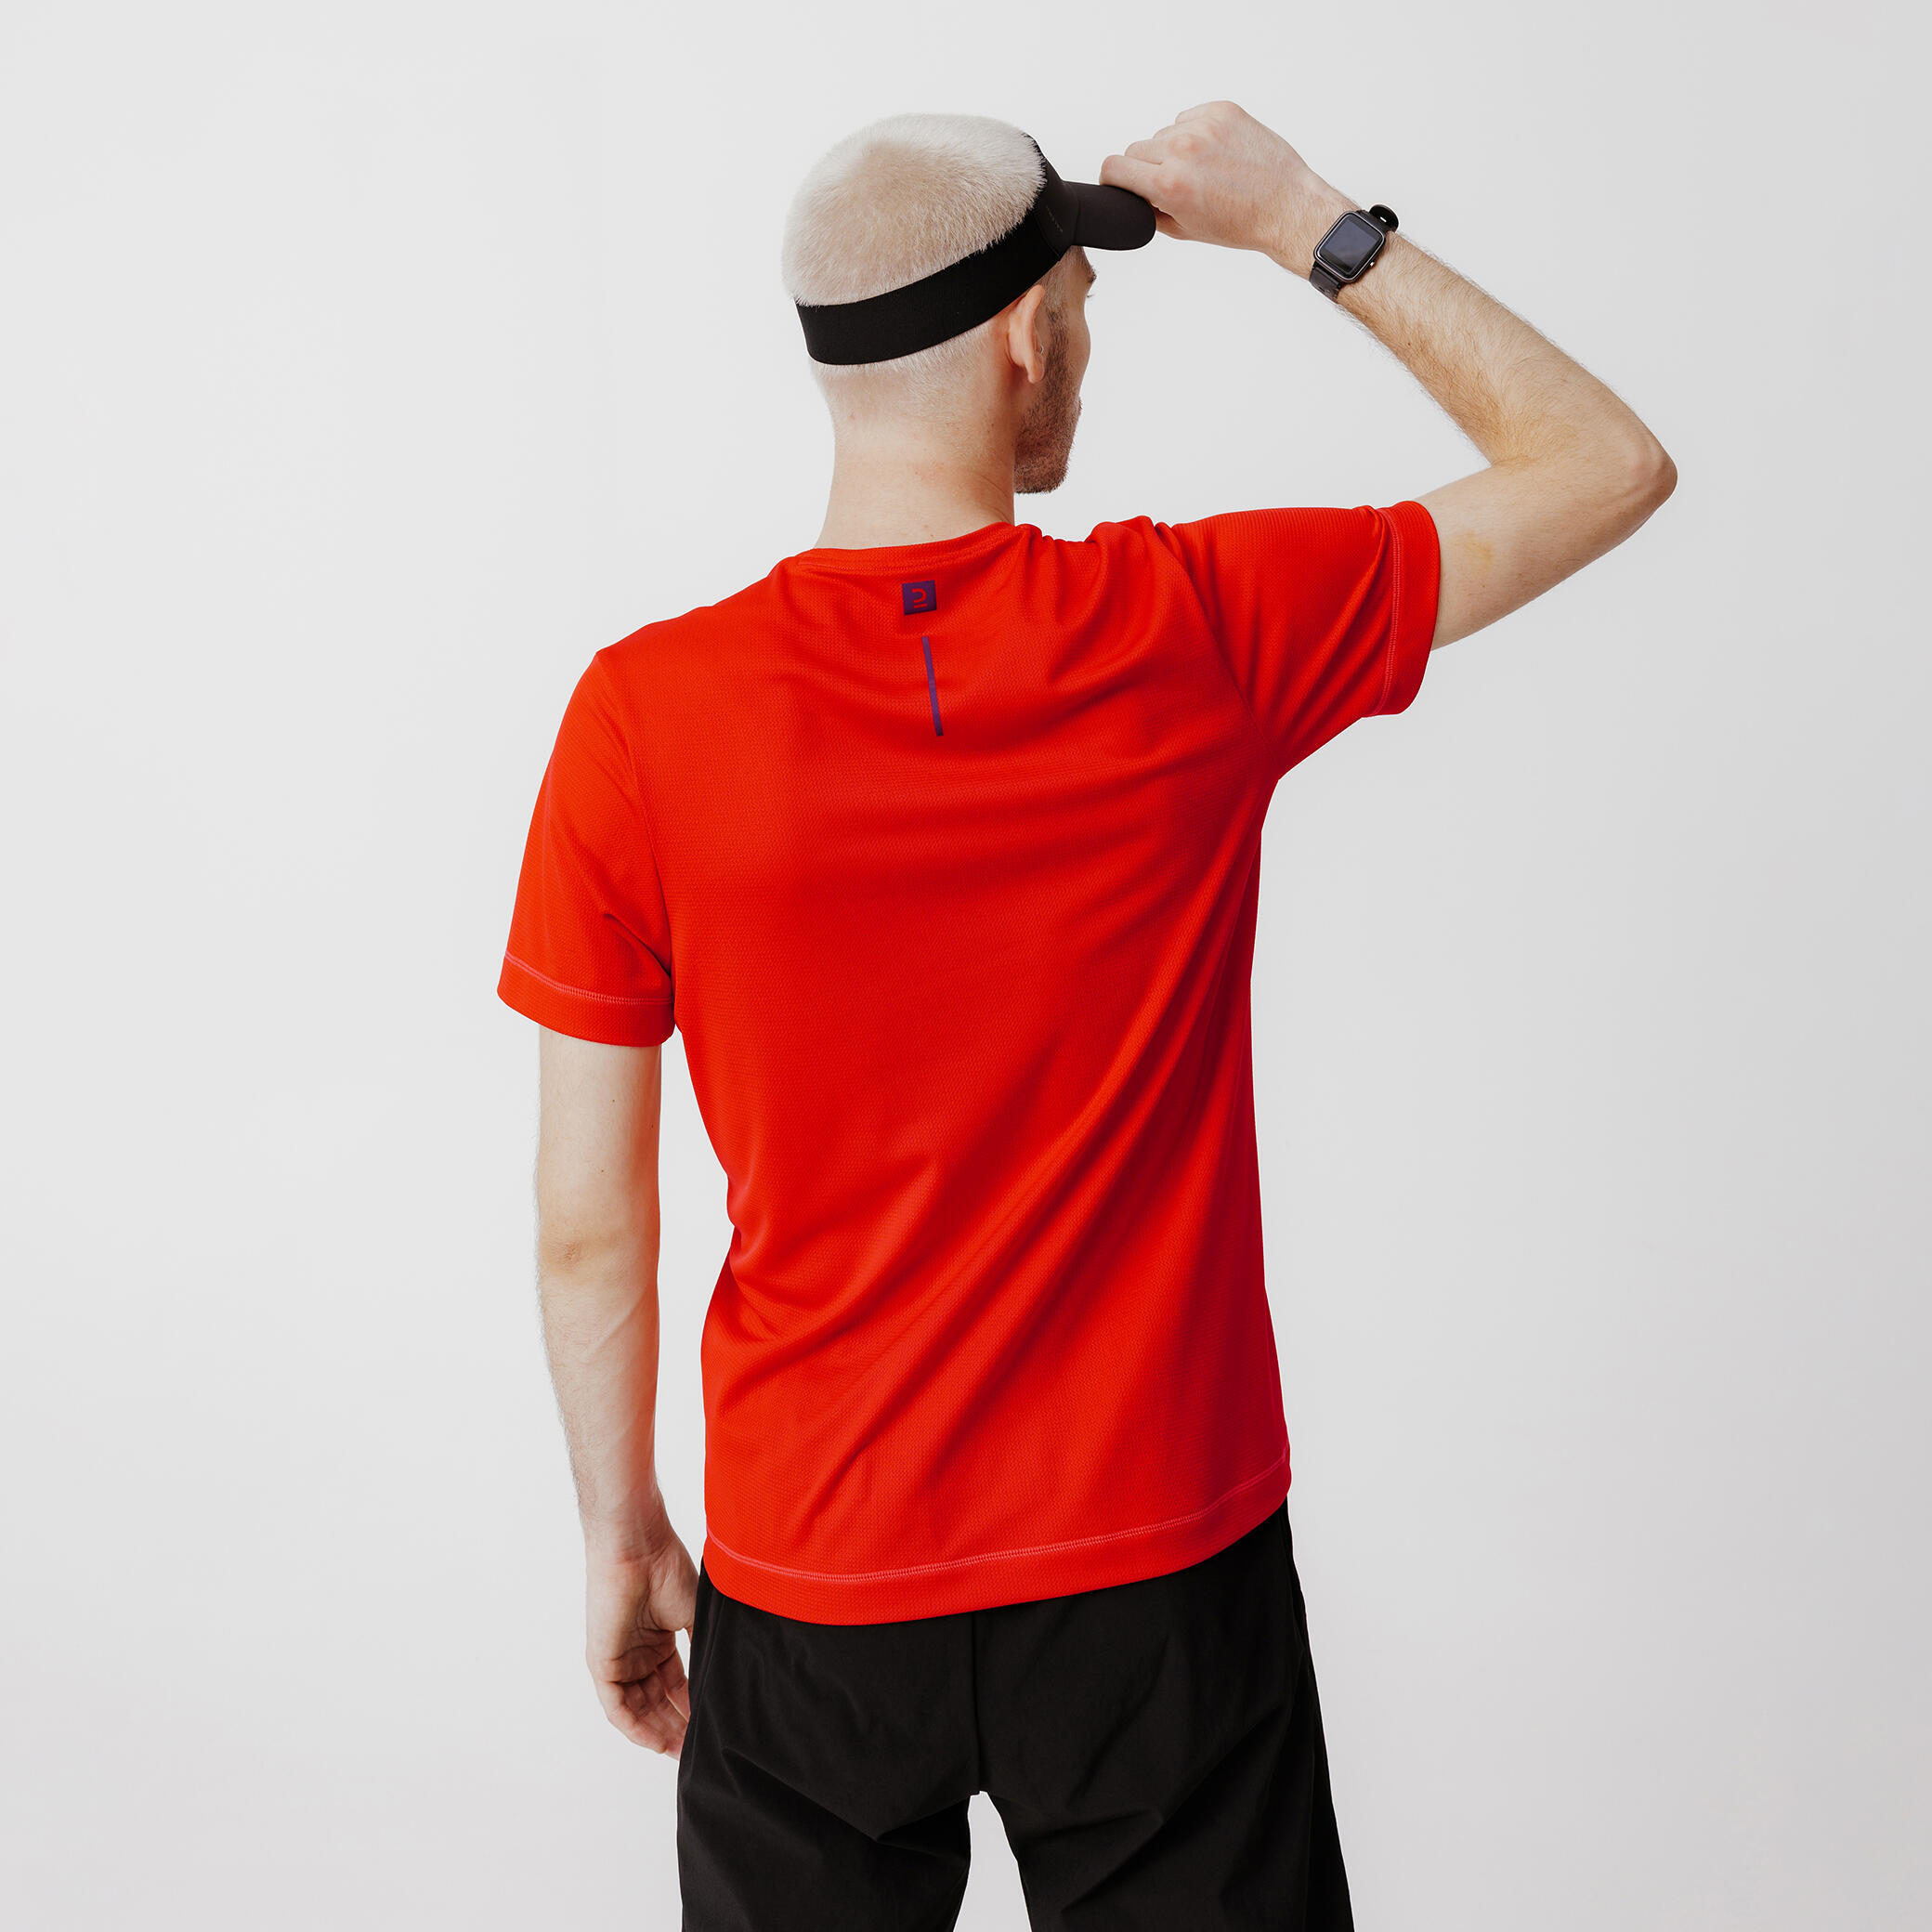 Dry Men's Running Breathable T-shirt - Red 5/5